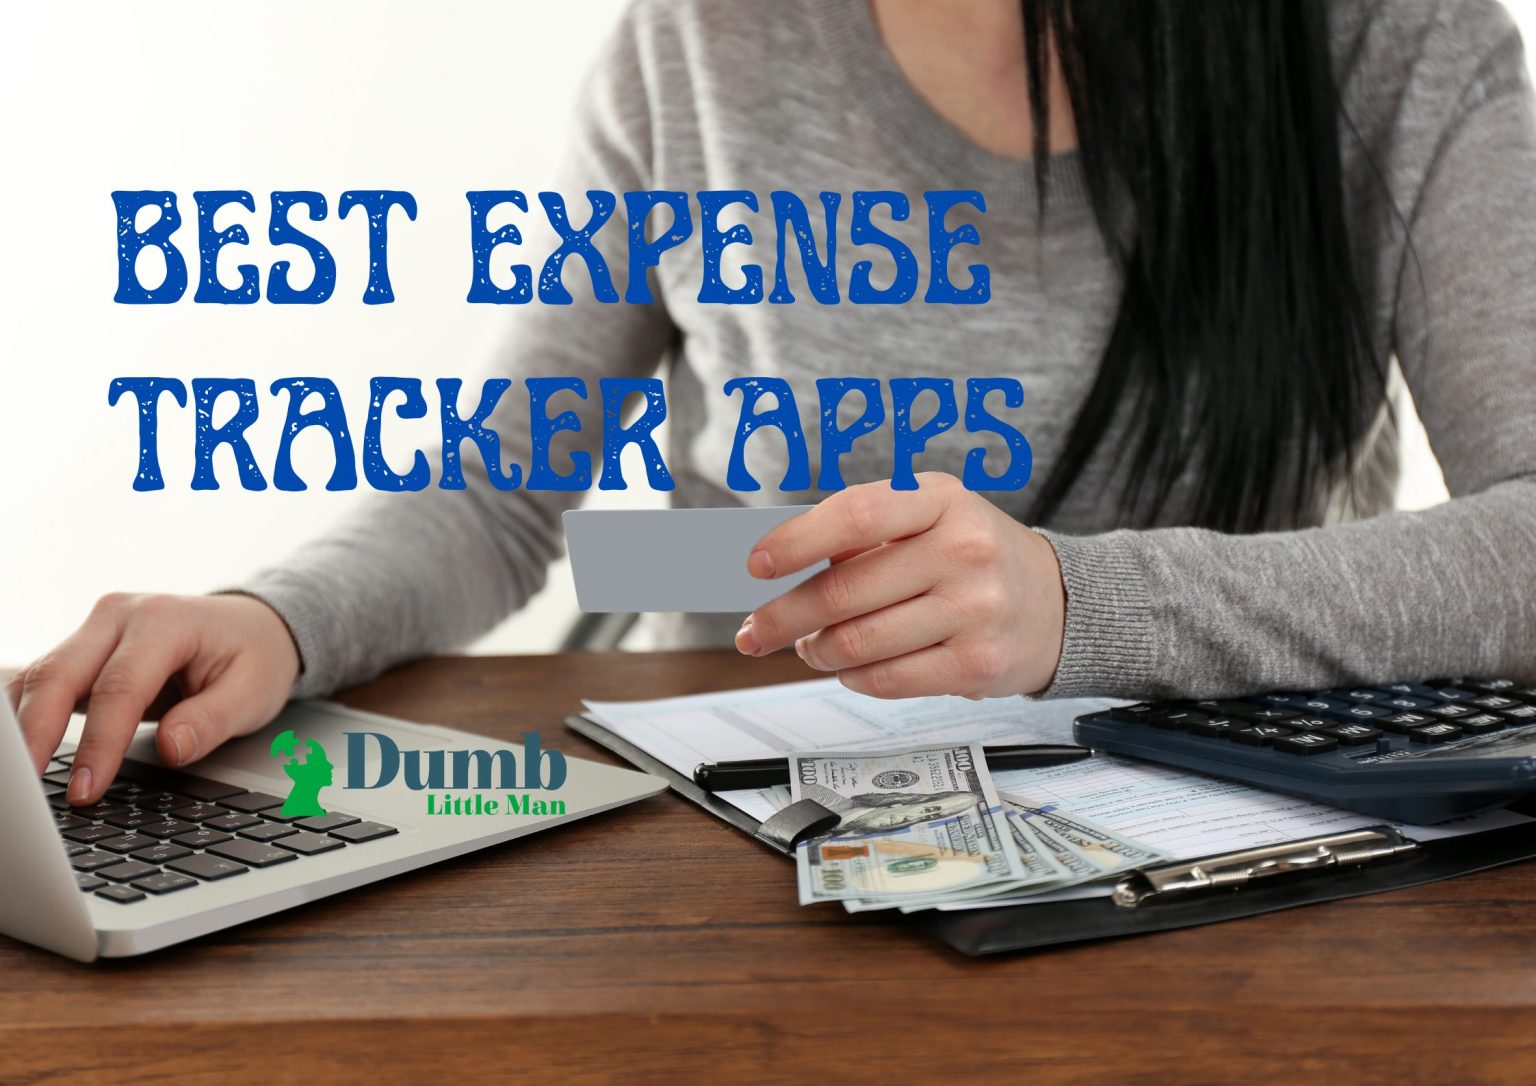 best free business expense tracker app 2018